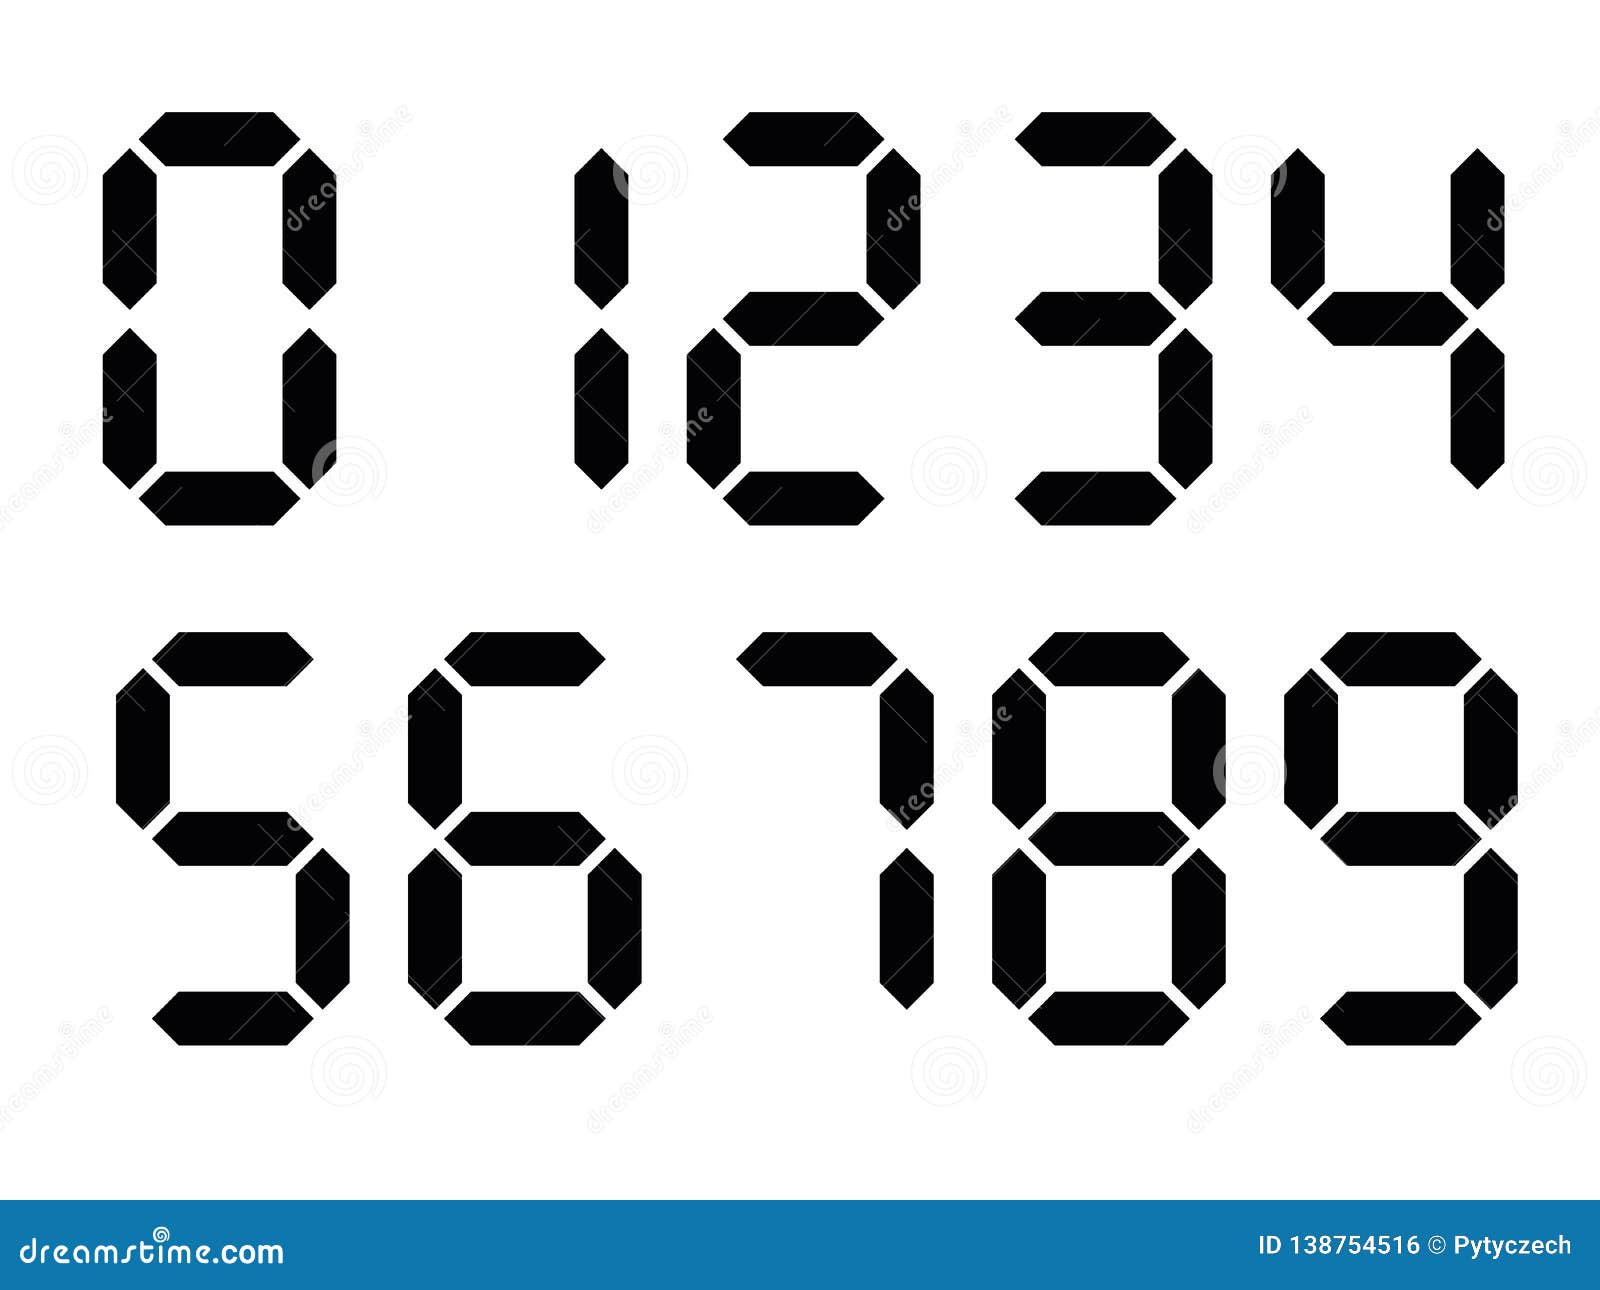 Шрифт электронные часы. Цифры электронных часов. Цифры для цифровых часов. Цифровые часы вектор. Сегментные цифры для часов.